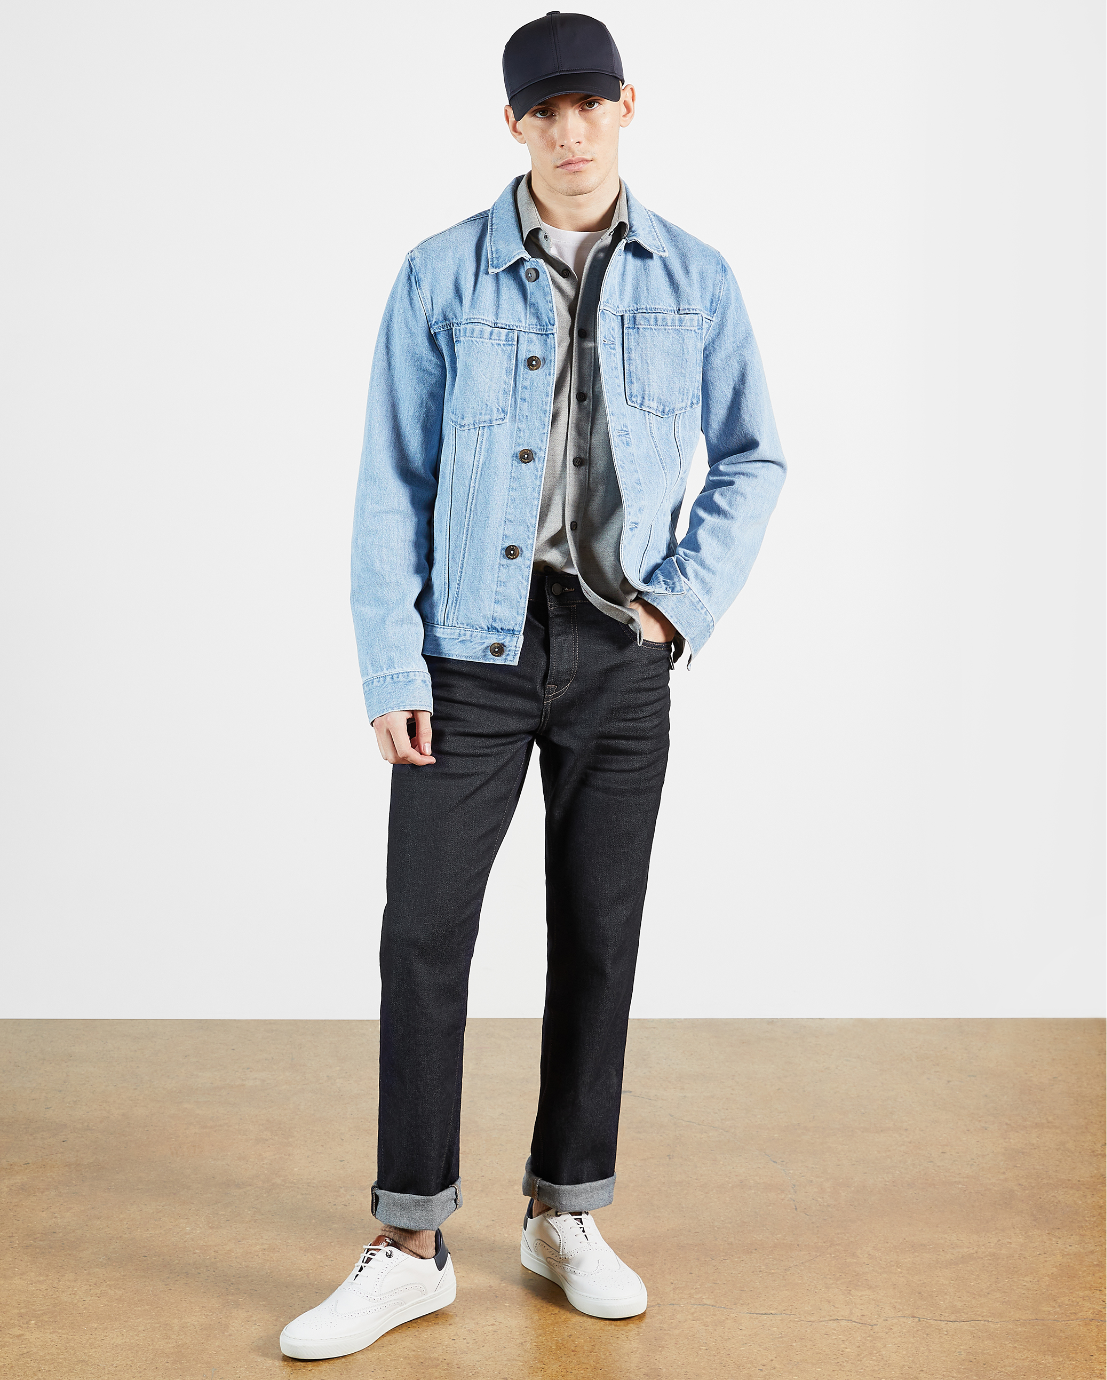 Denim Jacket Guide: My Favorite Jean Jacket Styles - Fashion Jackson | Denim  jacket trend, Jacket outfit women, Light denim jacket